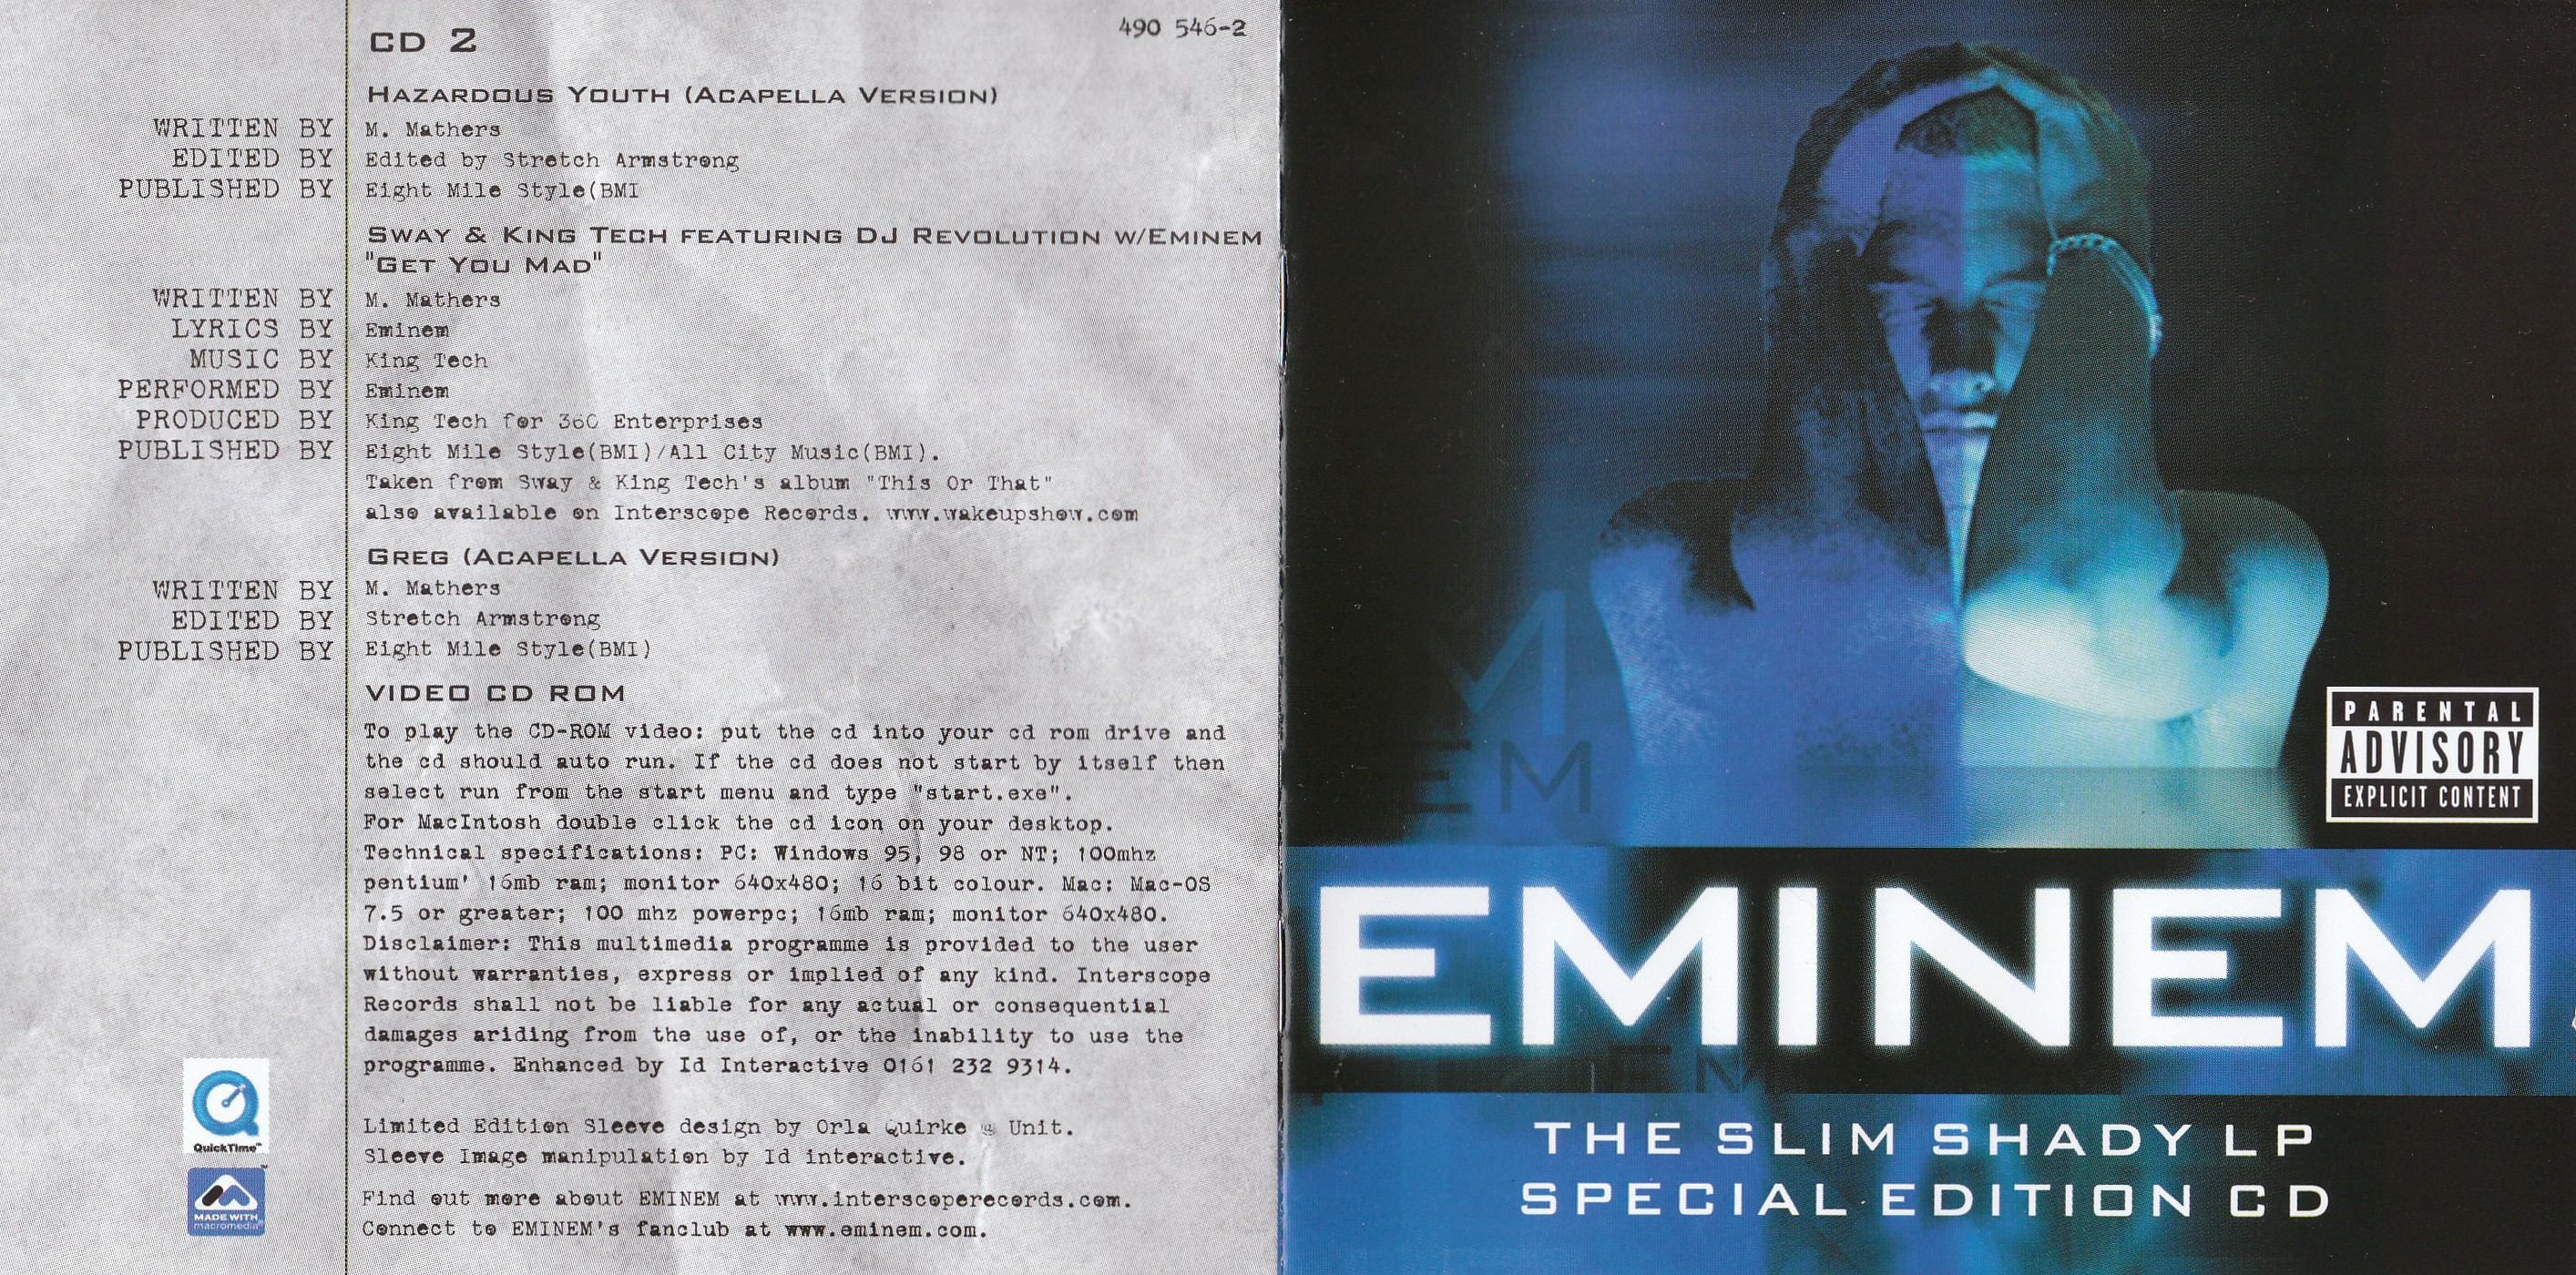 Eminem slim shady текст. Eminem the Slim Shady LP обложка. Eminem 1999 the Slim Shady LP Cover. Eminem the Slim Shady LP 1999. The Slim Shady LP Special Edition.